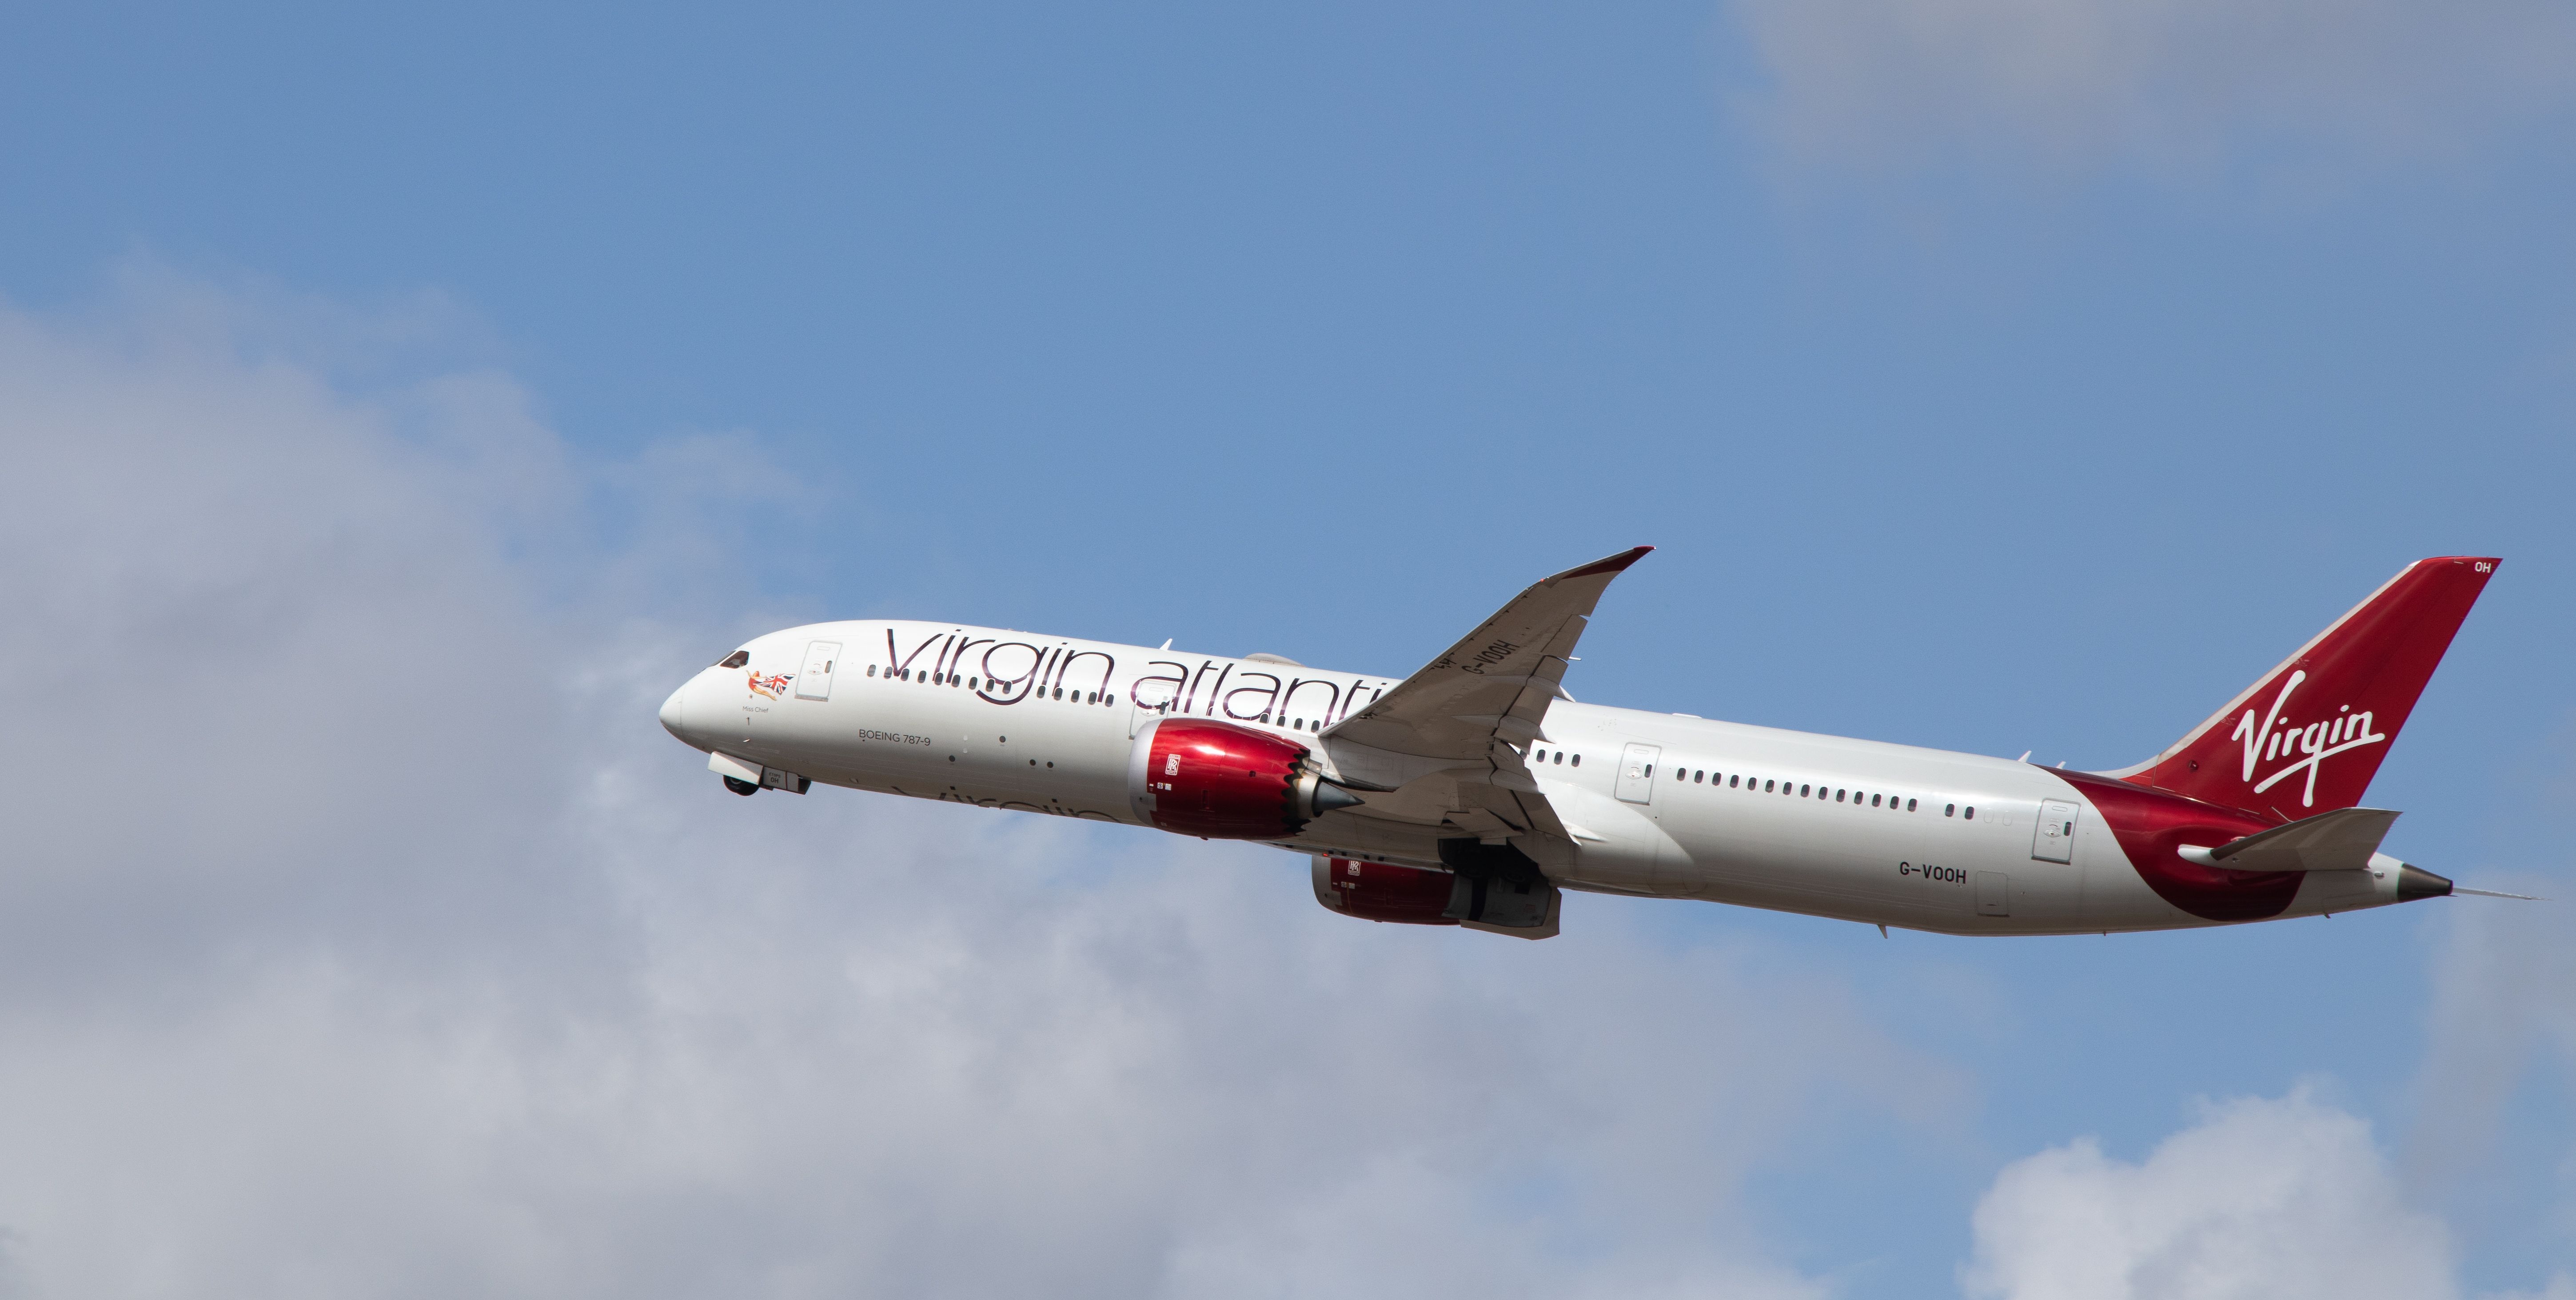 A Virgin Atlantic Boeing 787-9 Taking Off.